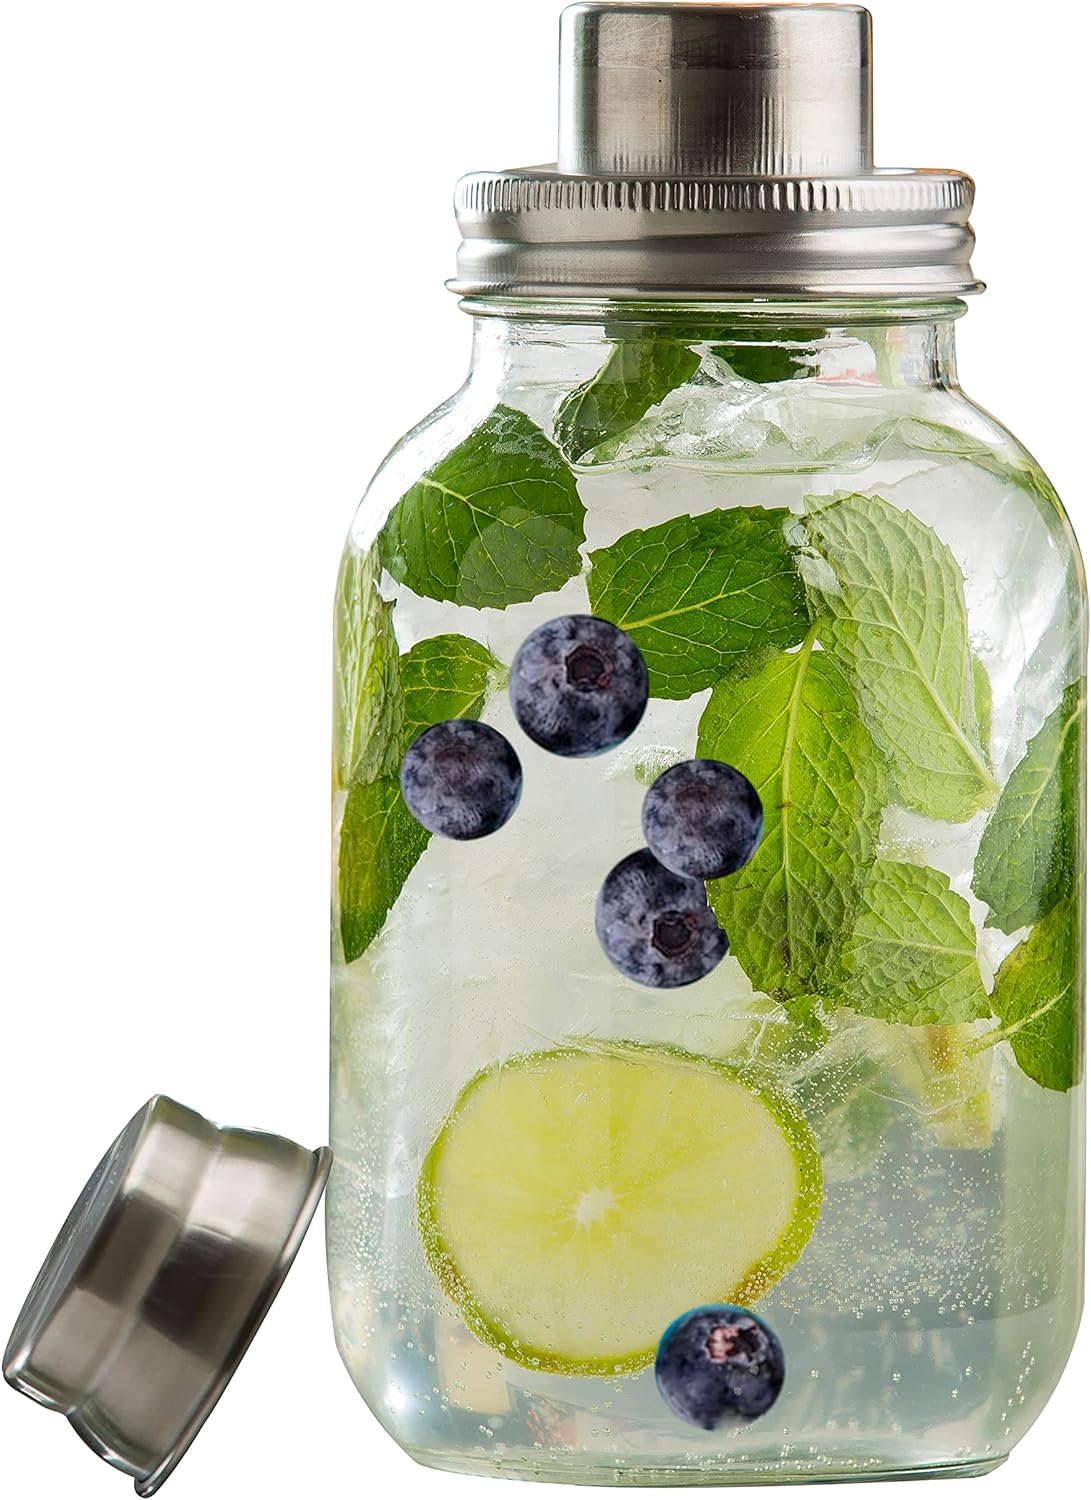 handy and cute cocktail shaker using a mason jar